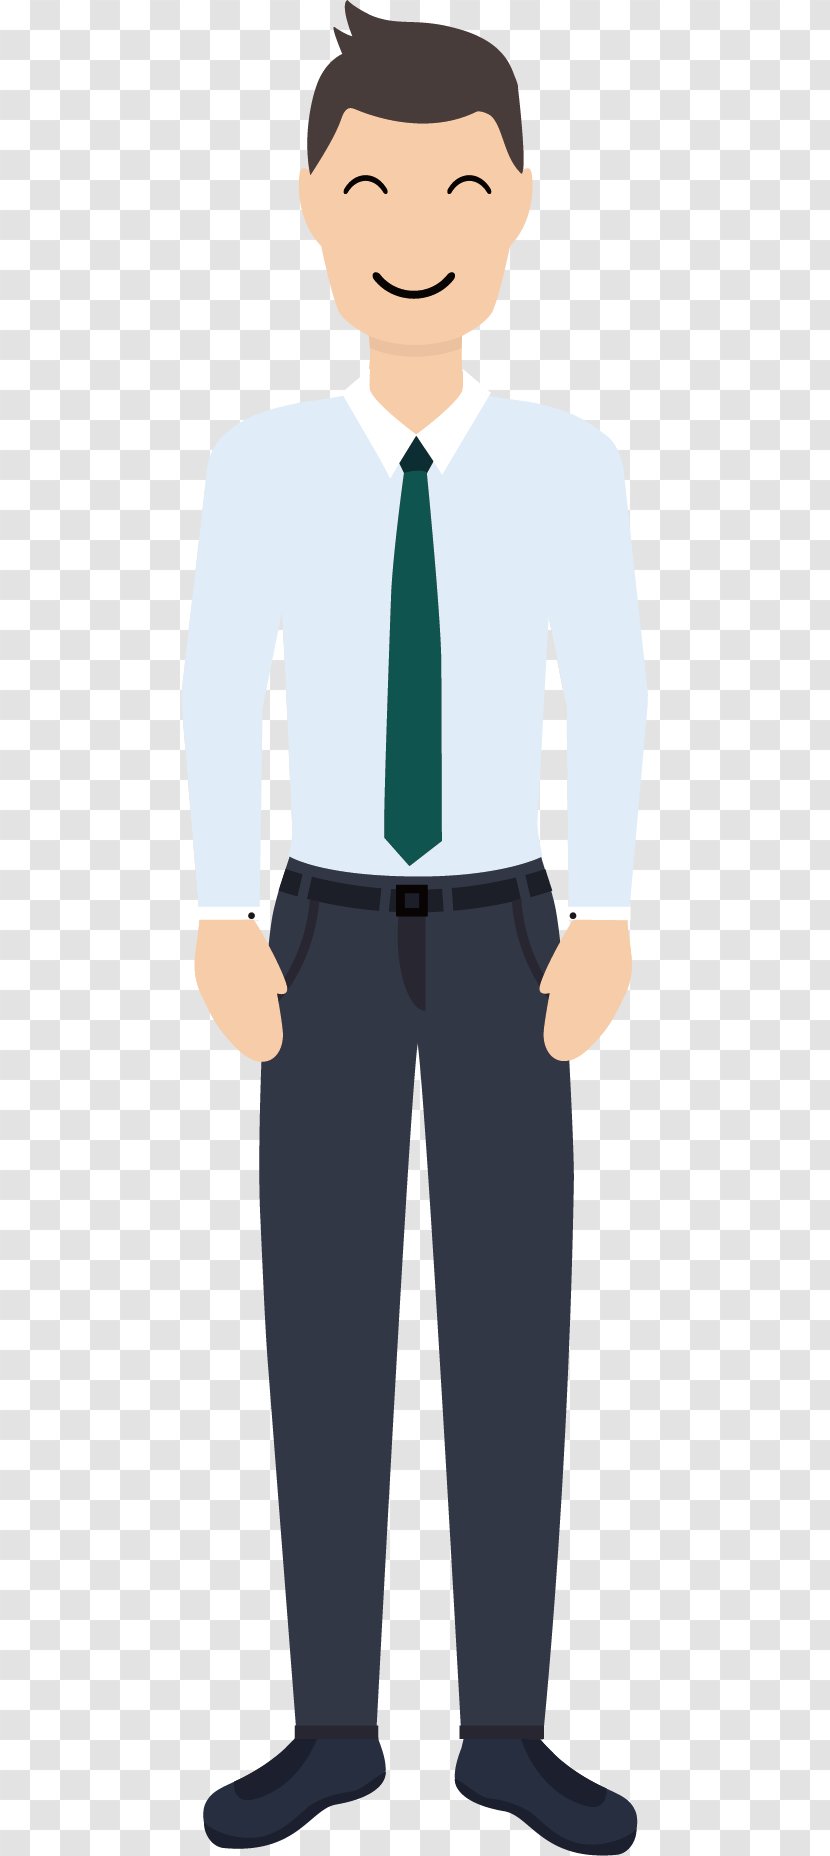 Flat Design Cartoon Icon - Tuxedo - Smiling Man Transparent PNG